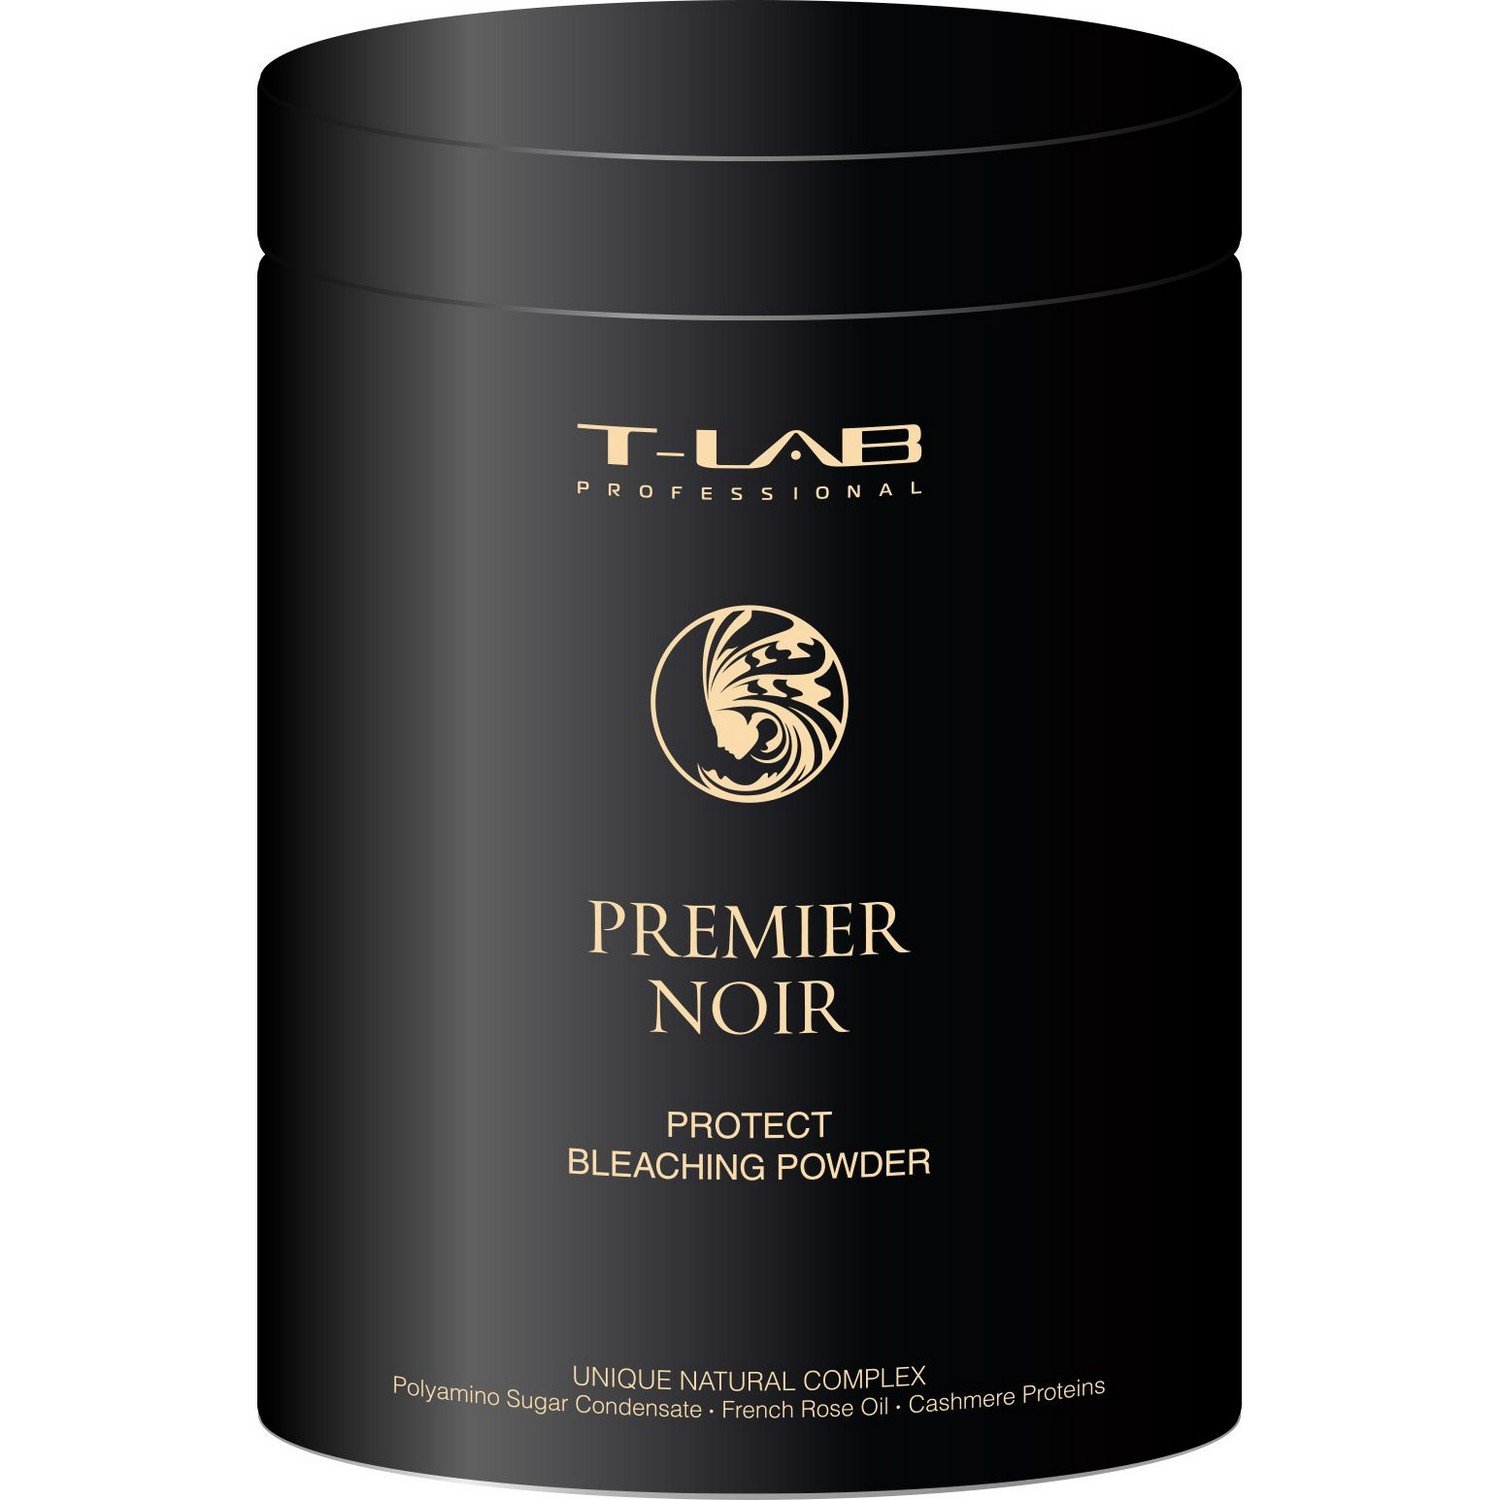 Пудра T-LAB Professional Premier Noir Protect Bleaching Powder для защиты и осветления волос, 500 г - фото 1